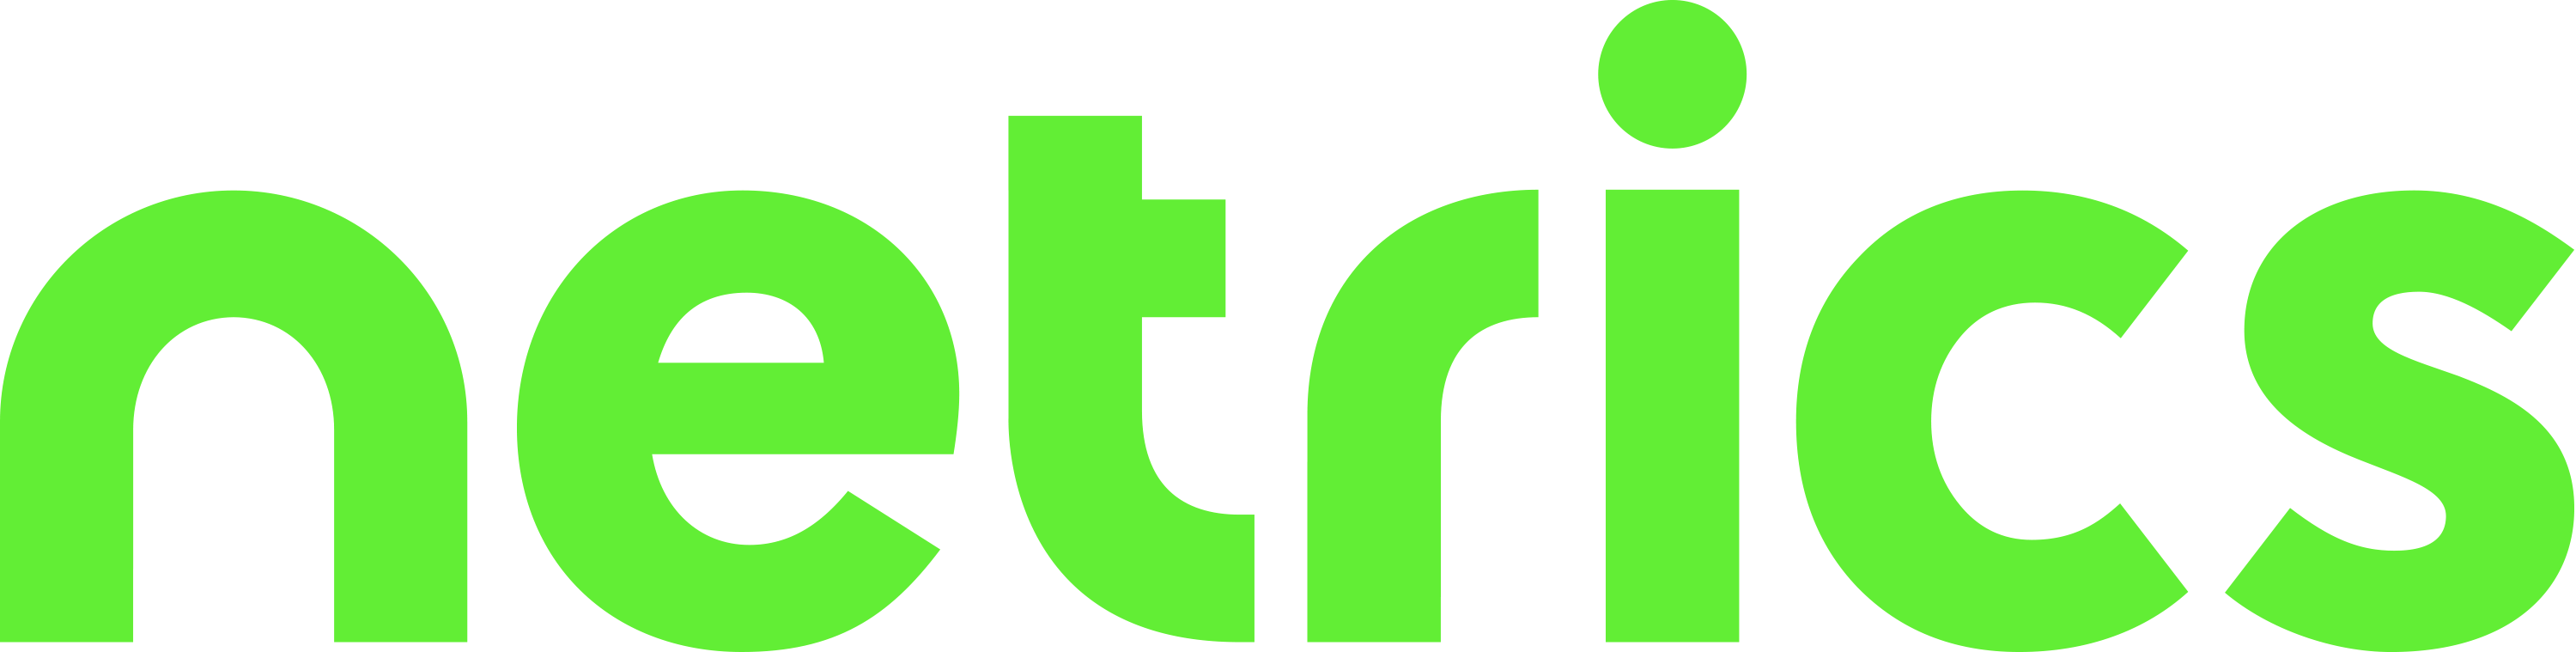 Netrics_Logo_RGB_green_transparent